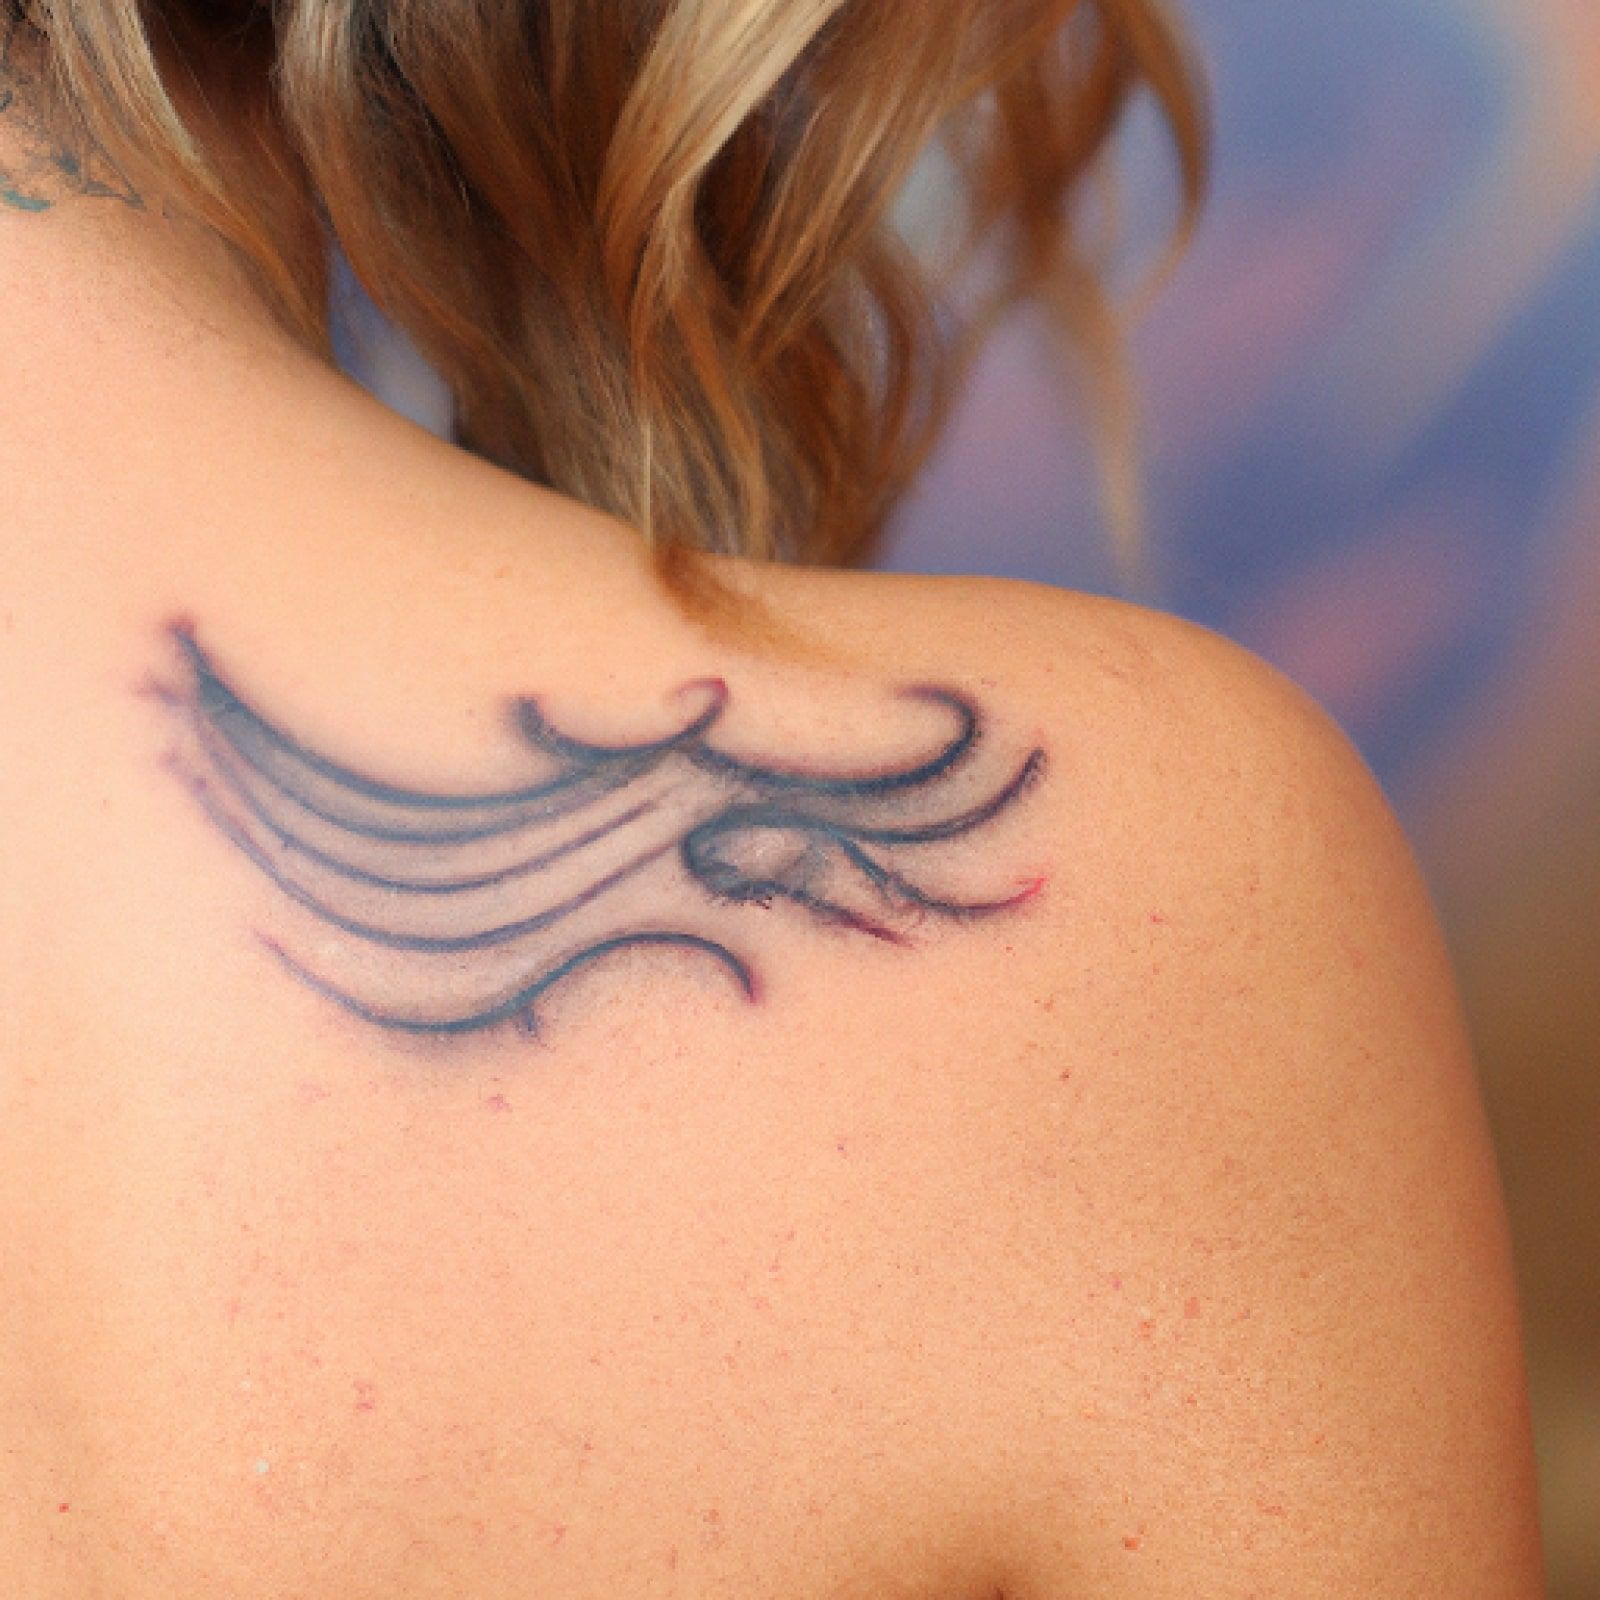 Wave tattoo on shoulder for women